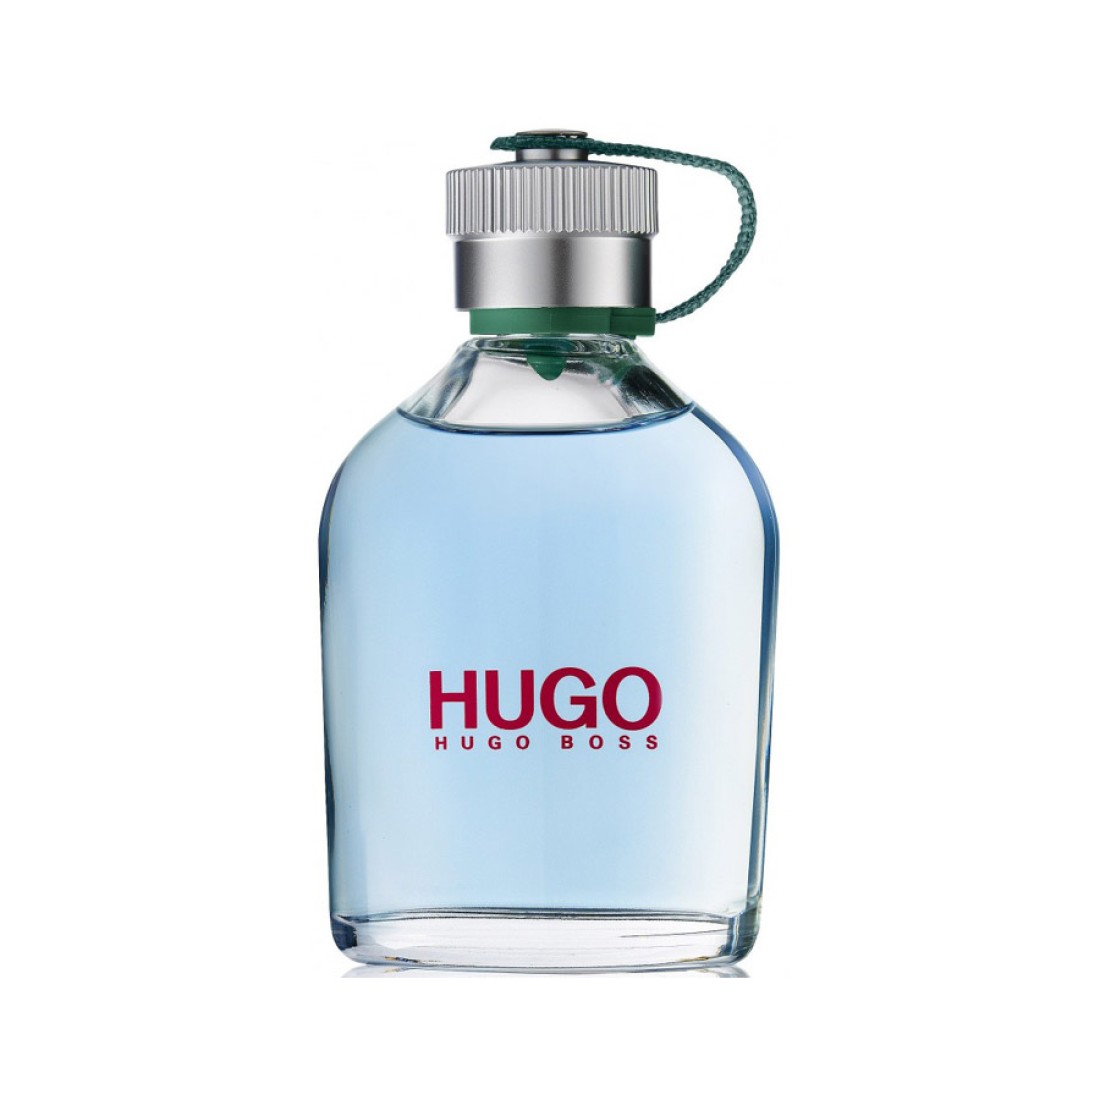 Hugo me. Хьюго босс. Хьюго босс Хьюго мен. Парфюм Hugo man Hugo Boss. Hugo Boss Classic.